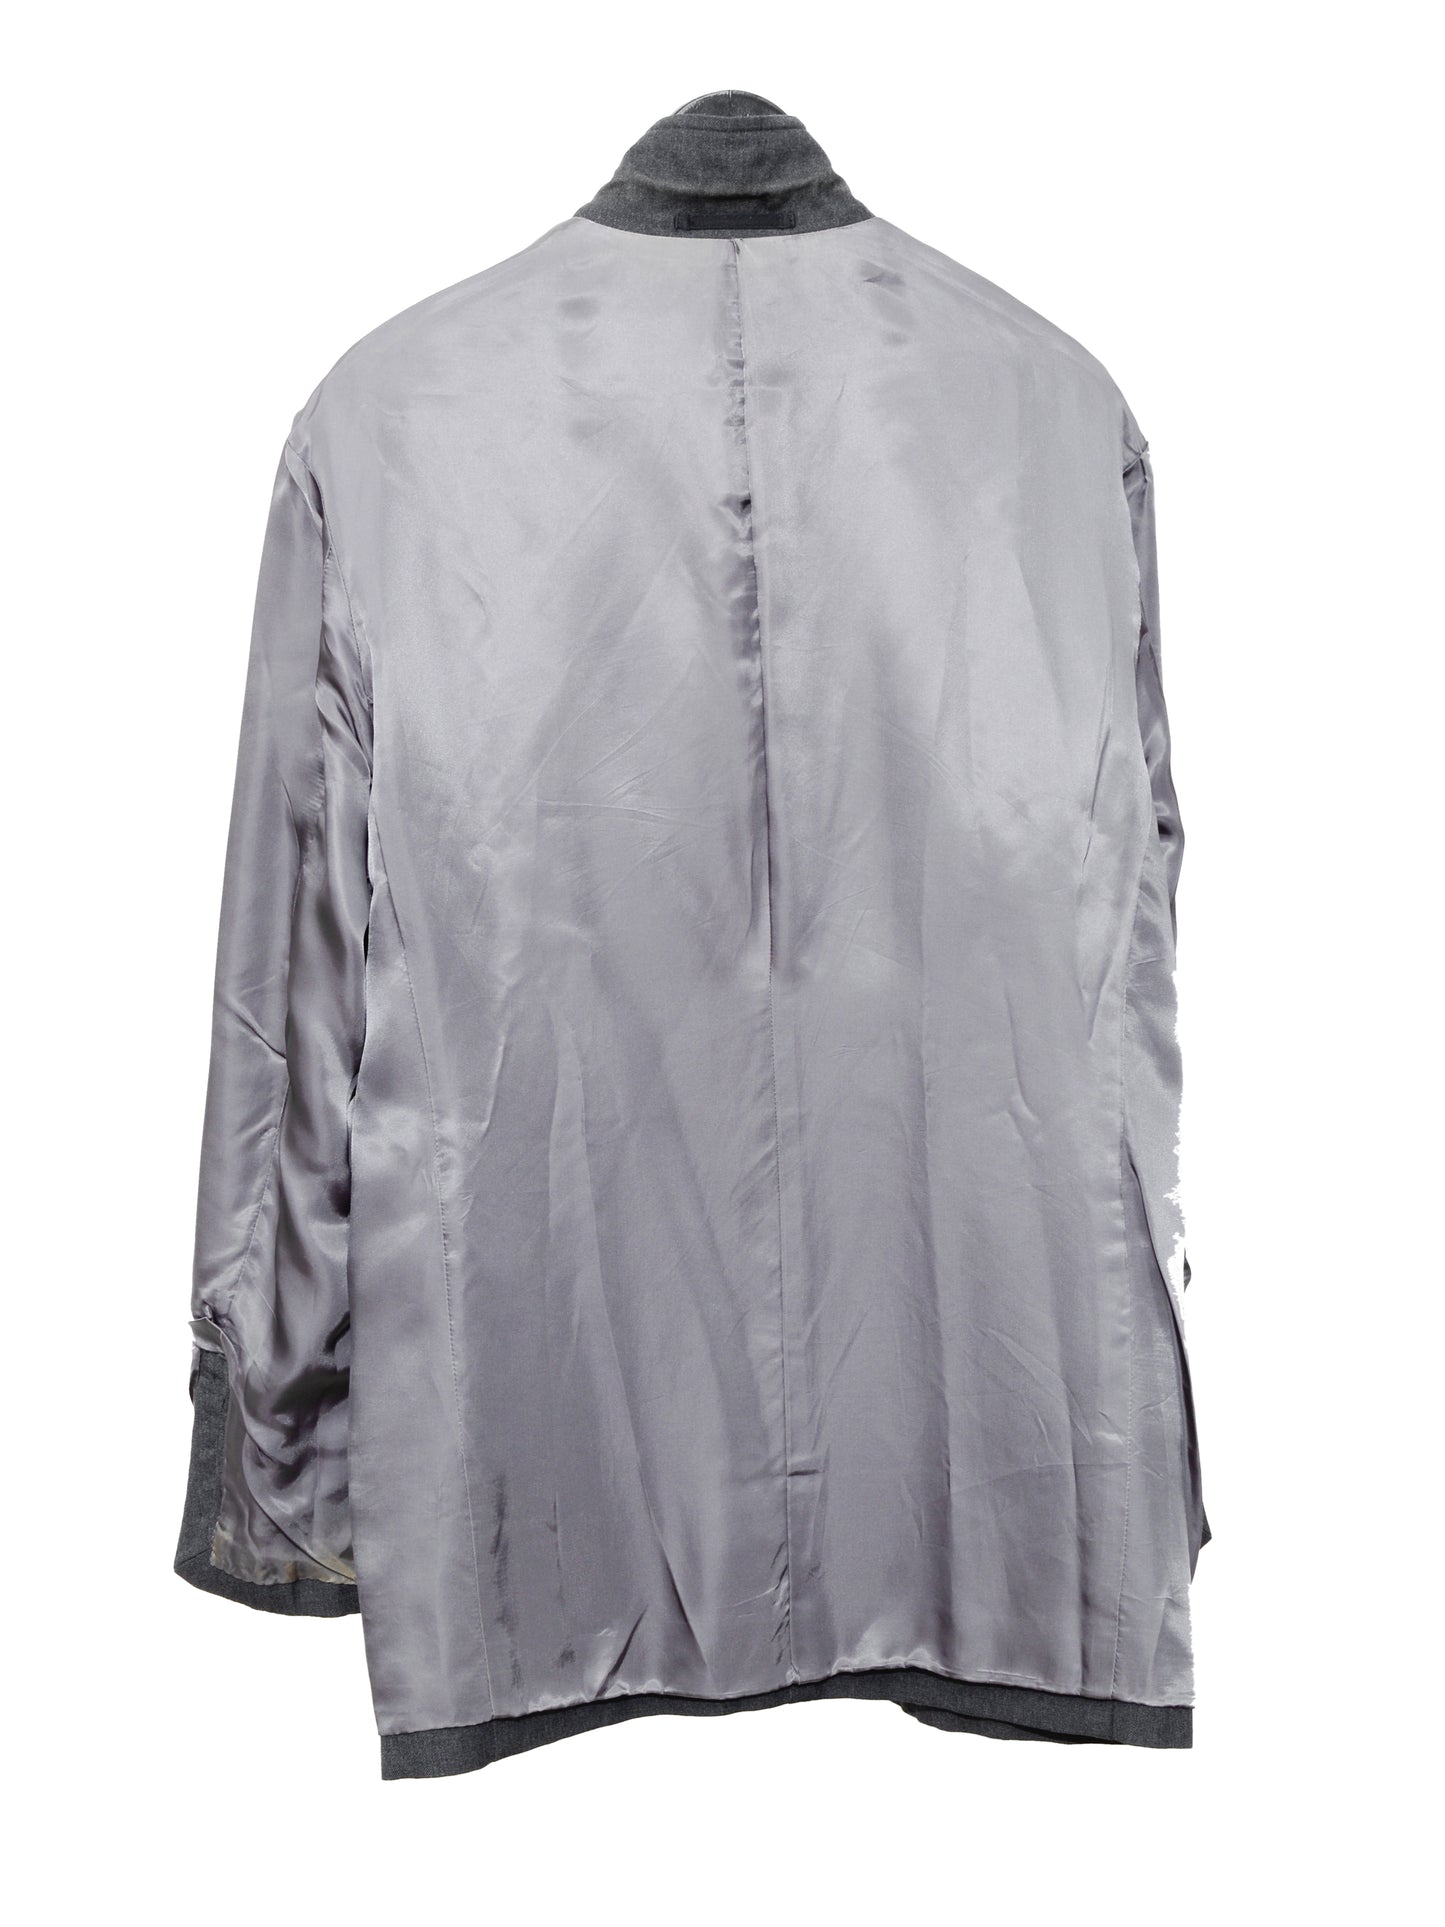 tailored jacket grey ∙ wool ∙ medium